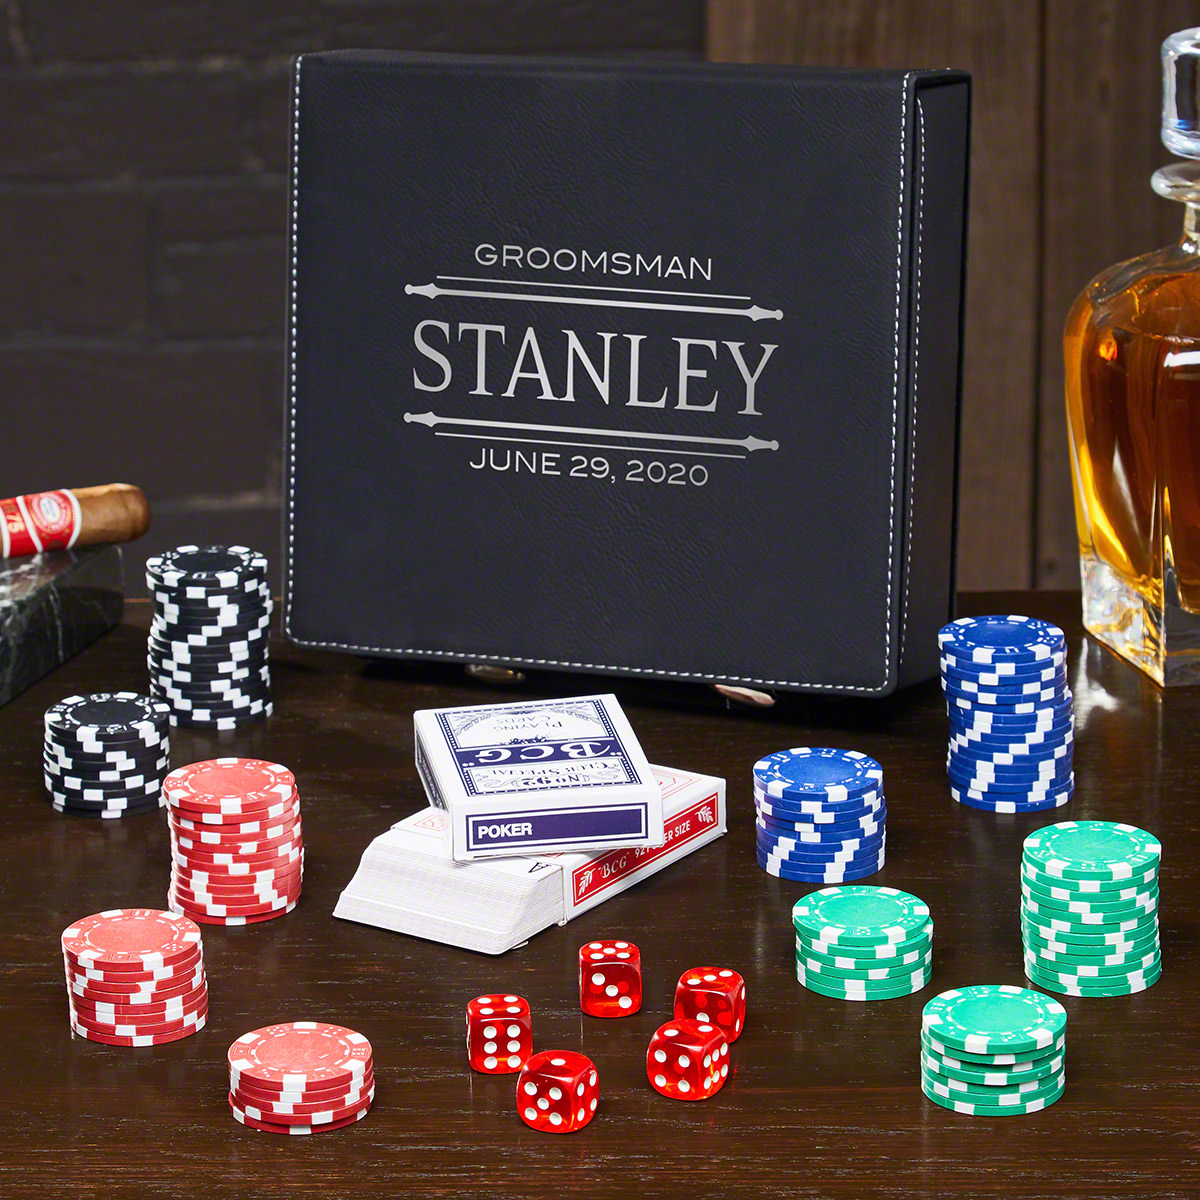 Stanford Personalized Poker Set - Gift for Groomsmen